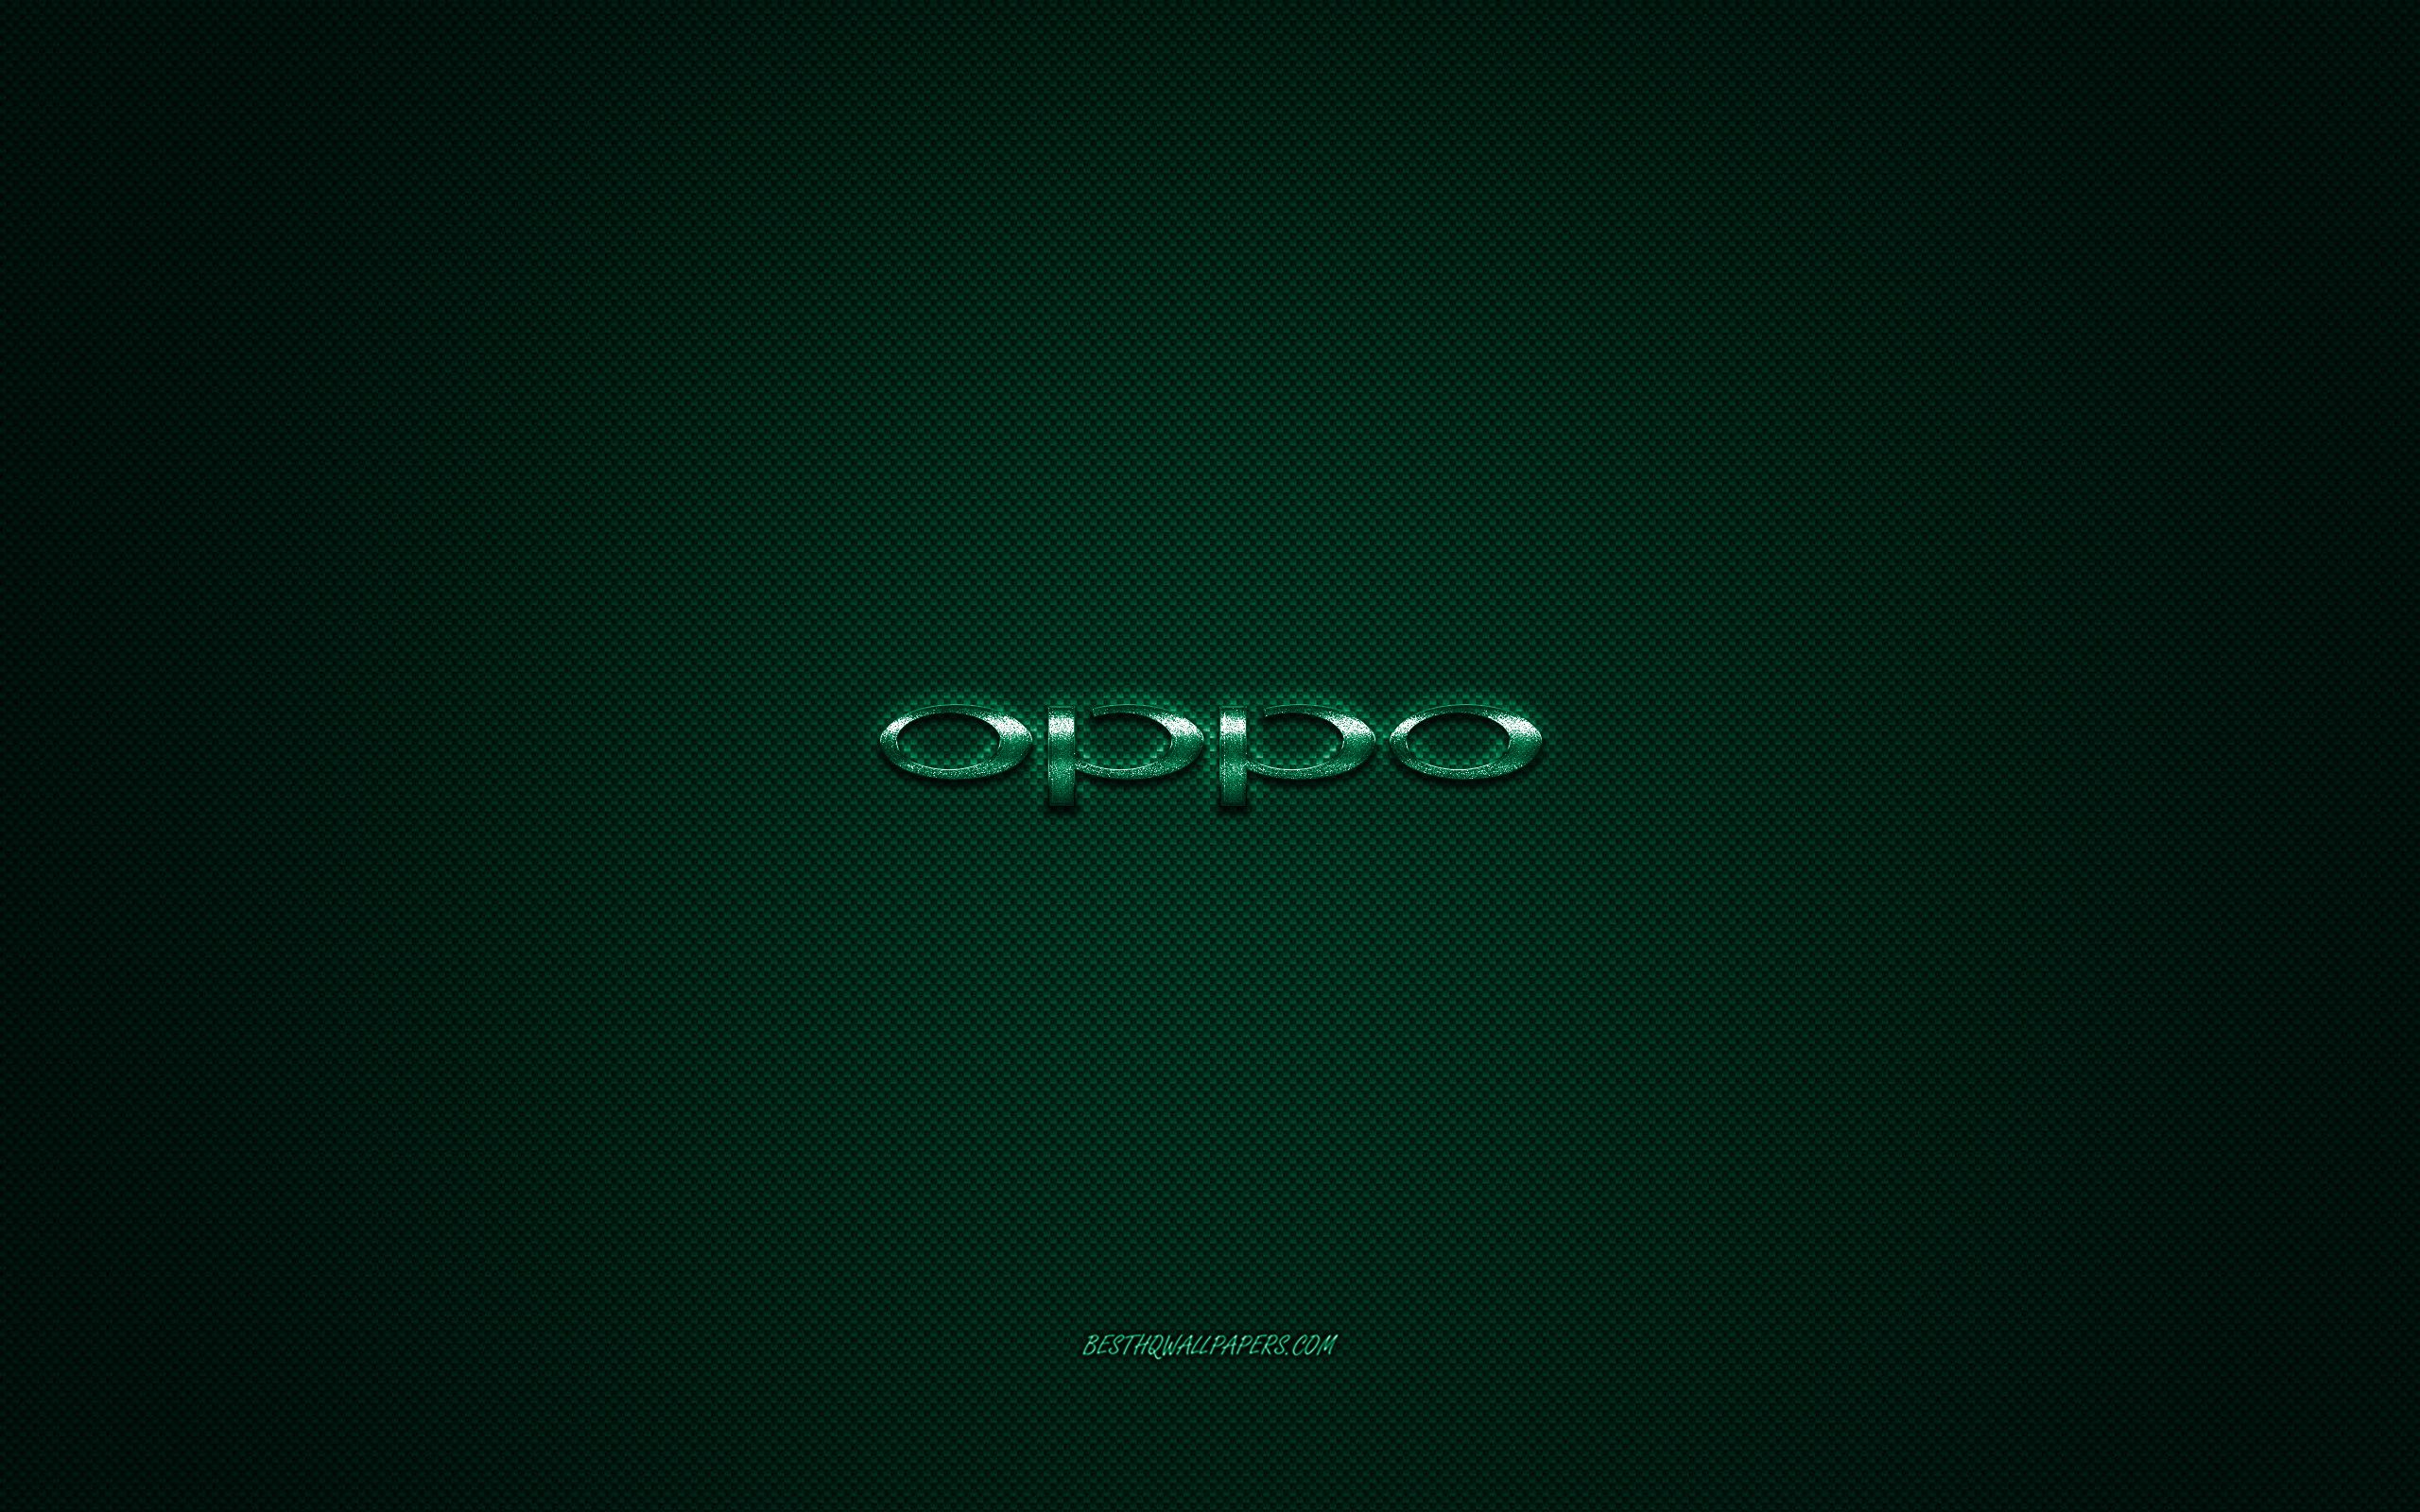 Download wallpaper Oppo logo, green shiny logo, Oppo metal emblem